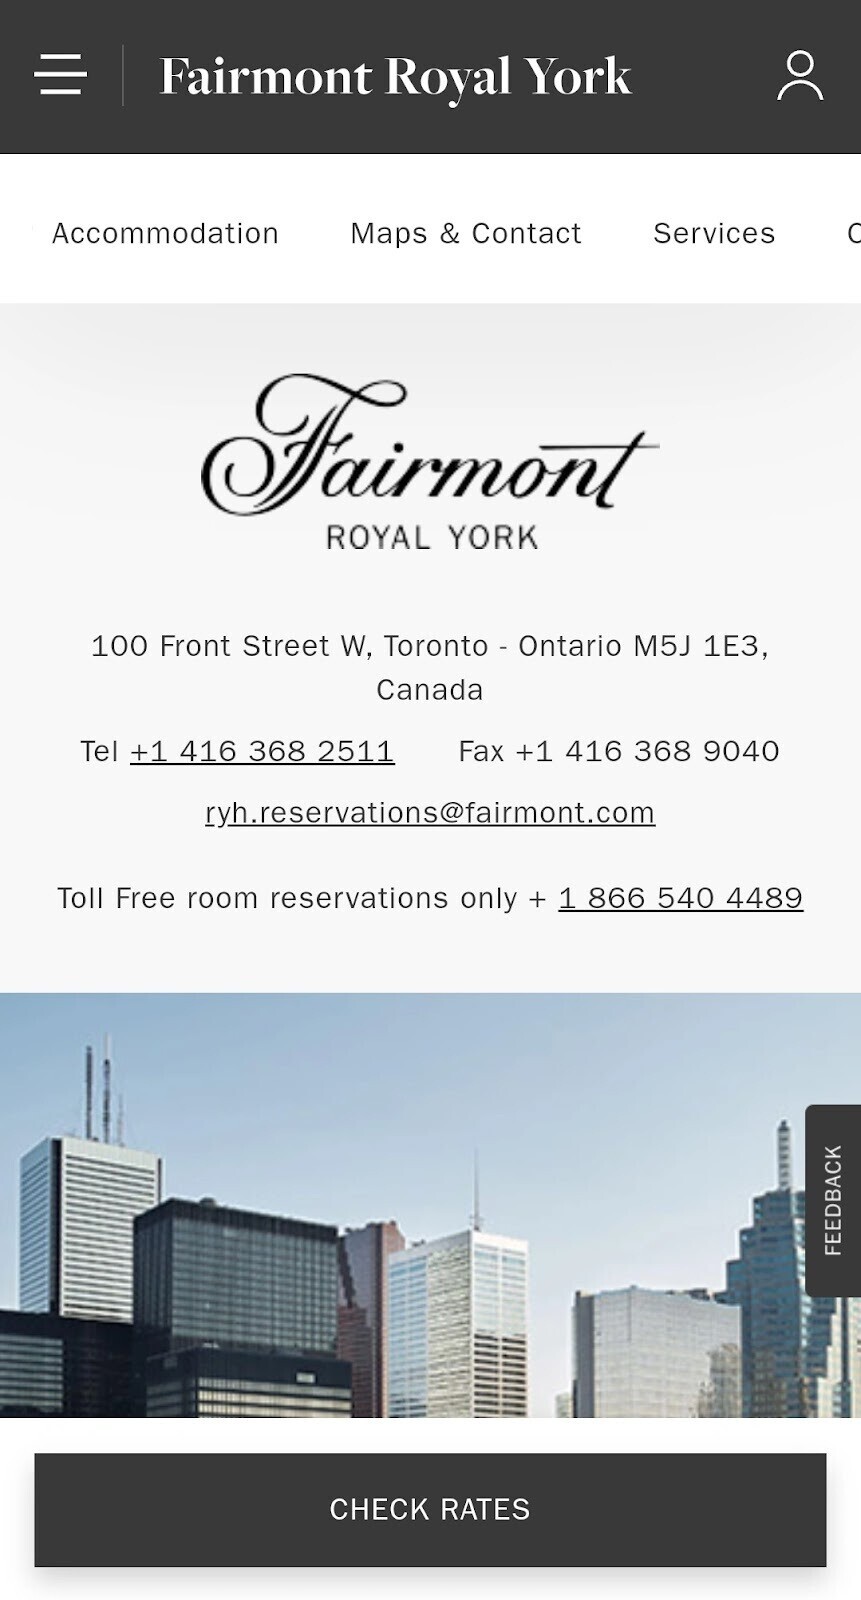 Fairmont Hotel in Toronto’s mobile website